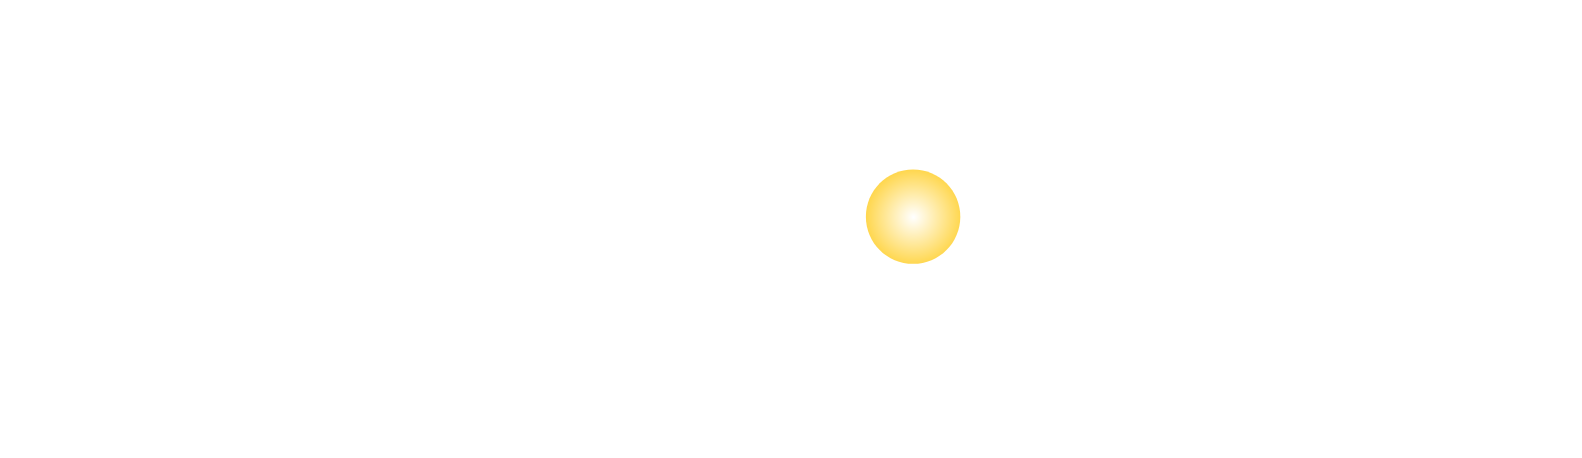 Cryo-Cell Logo groß für dunkle Hintergründe (transparentes PNG)